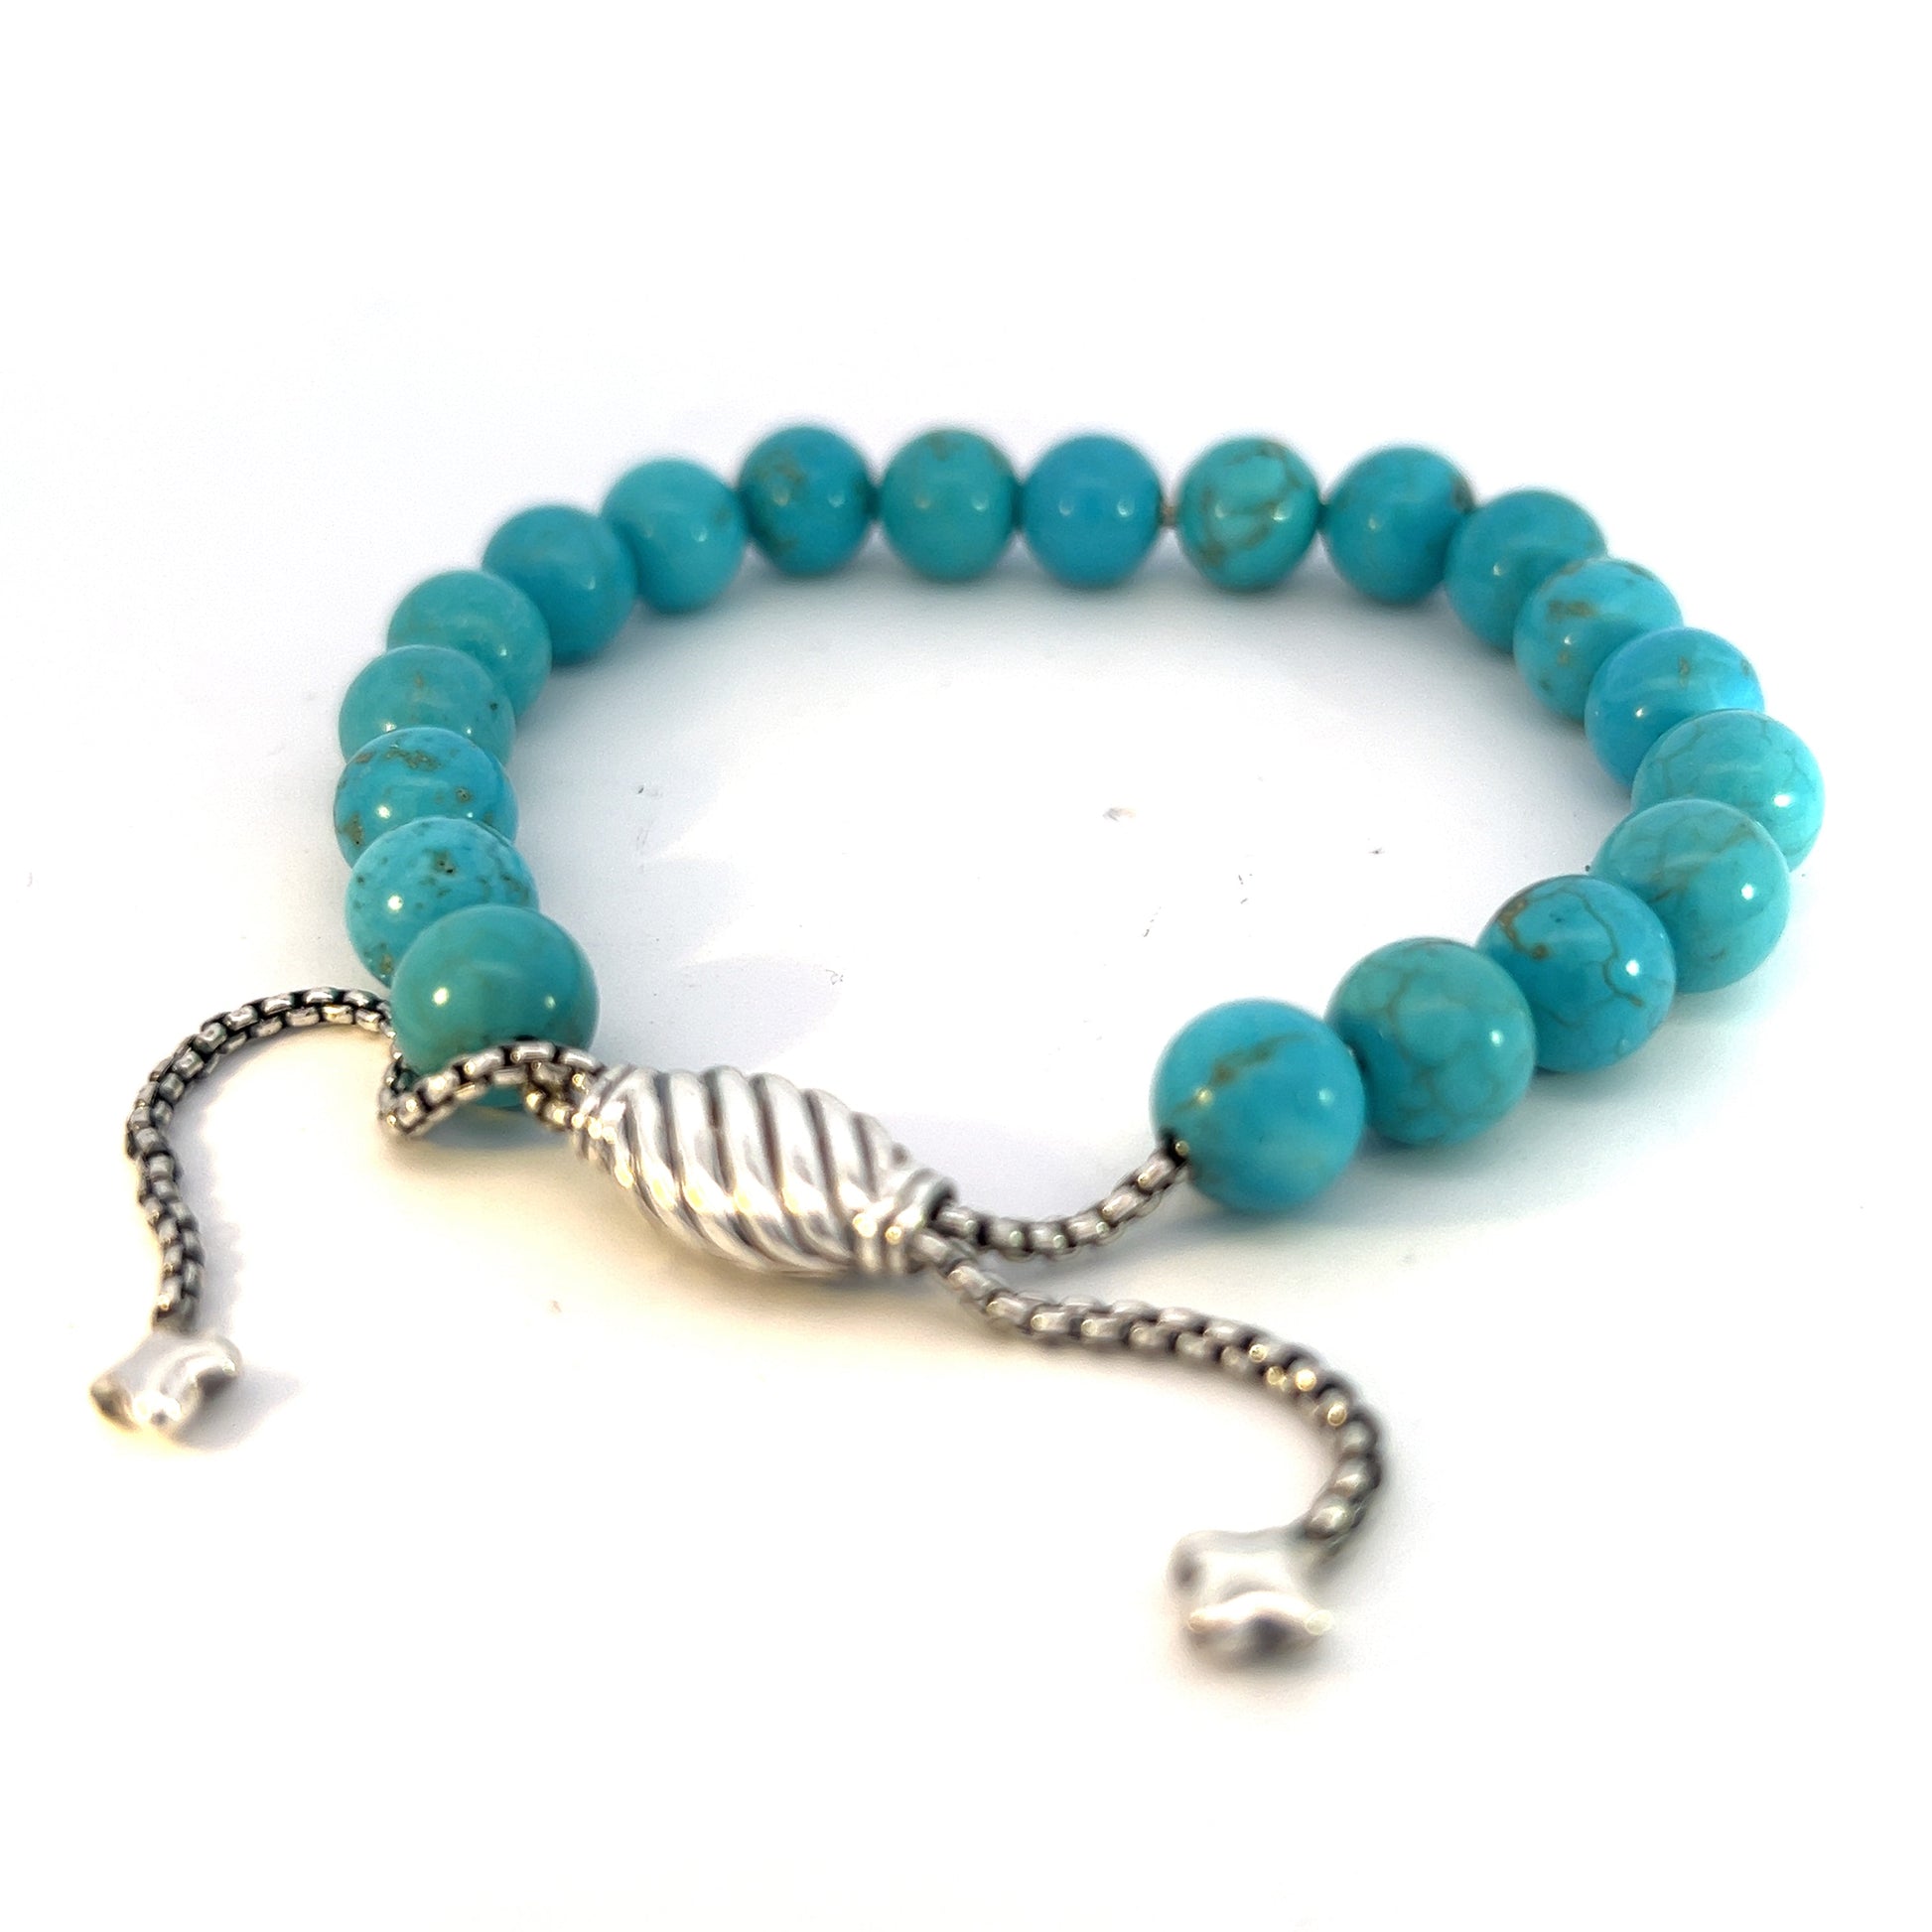 David Yurman Authentic Estate Turquoise Spiritual Beads Bracelet 6.6 - 8.5" Silver 8 mm DY455